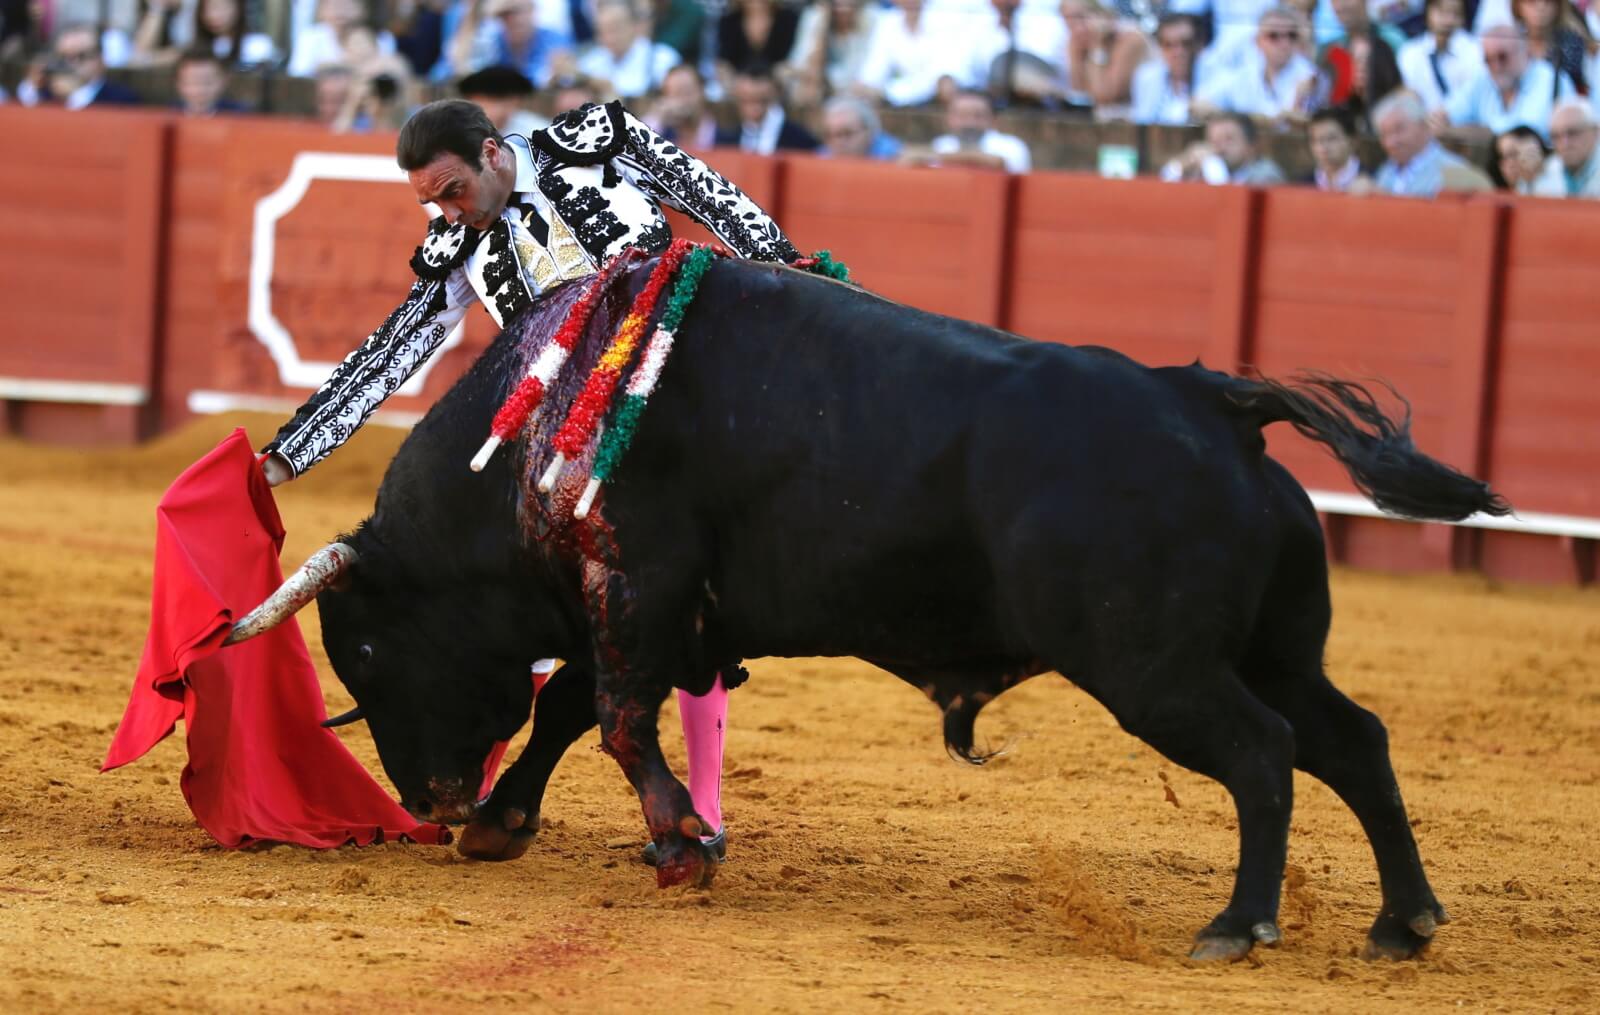 Tradycyjna hiszpańska corrida fot. EPA/Jose Manuel Vide

